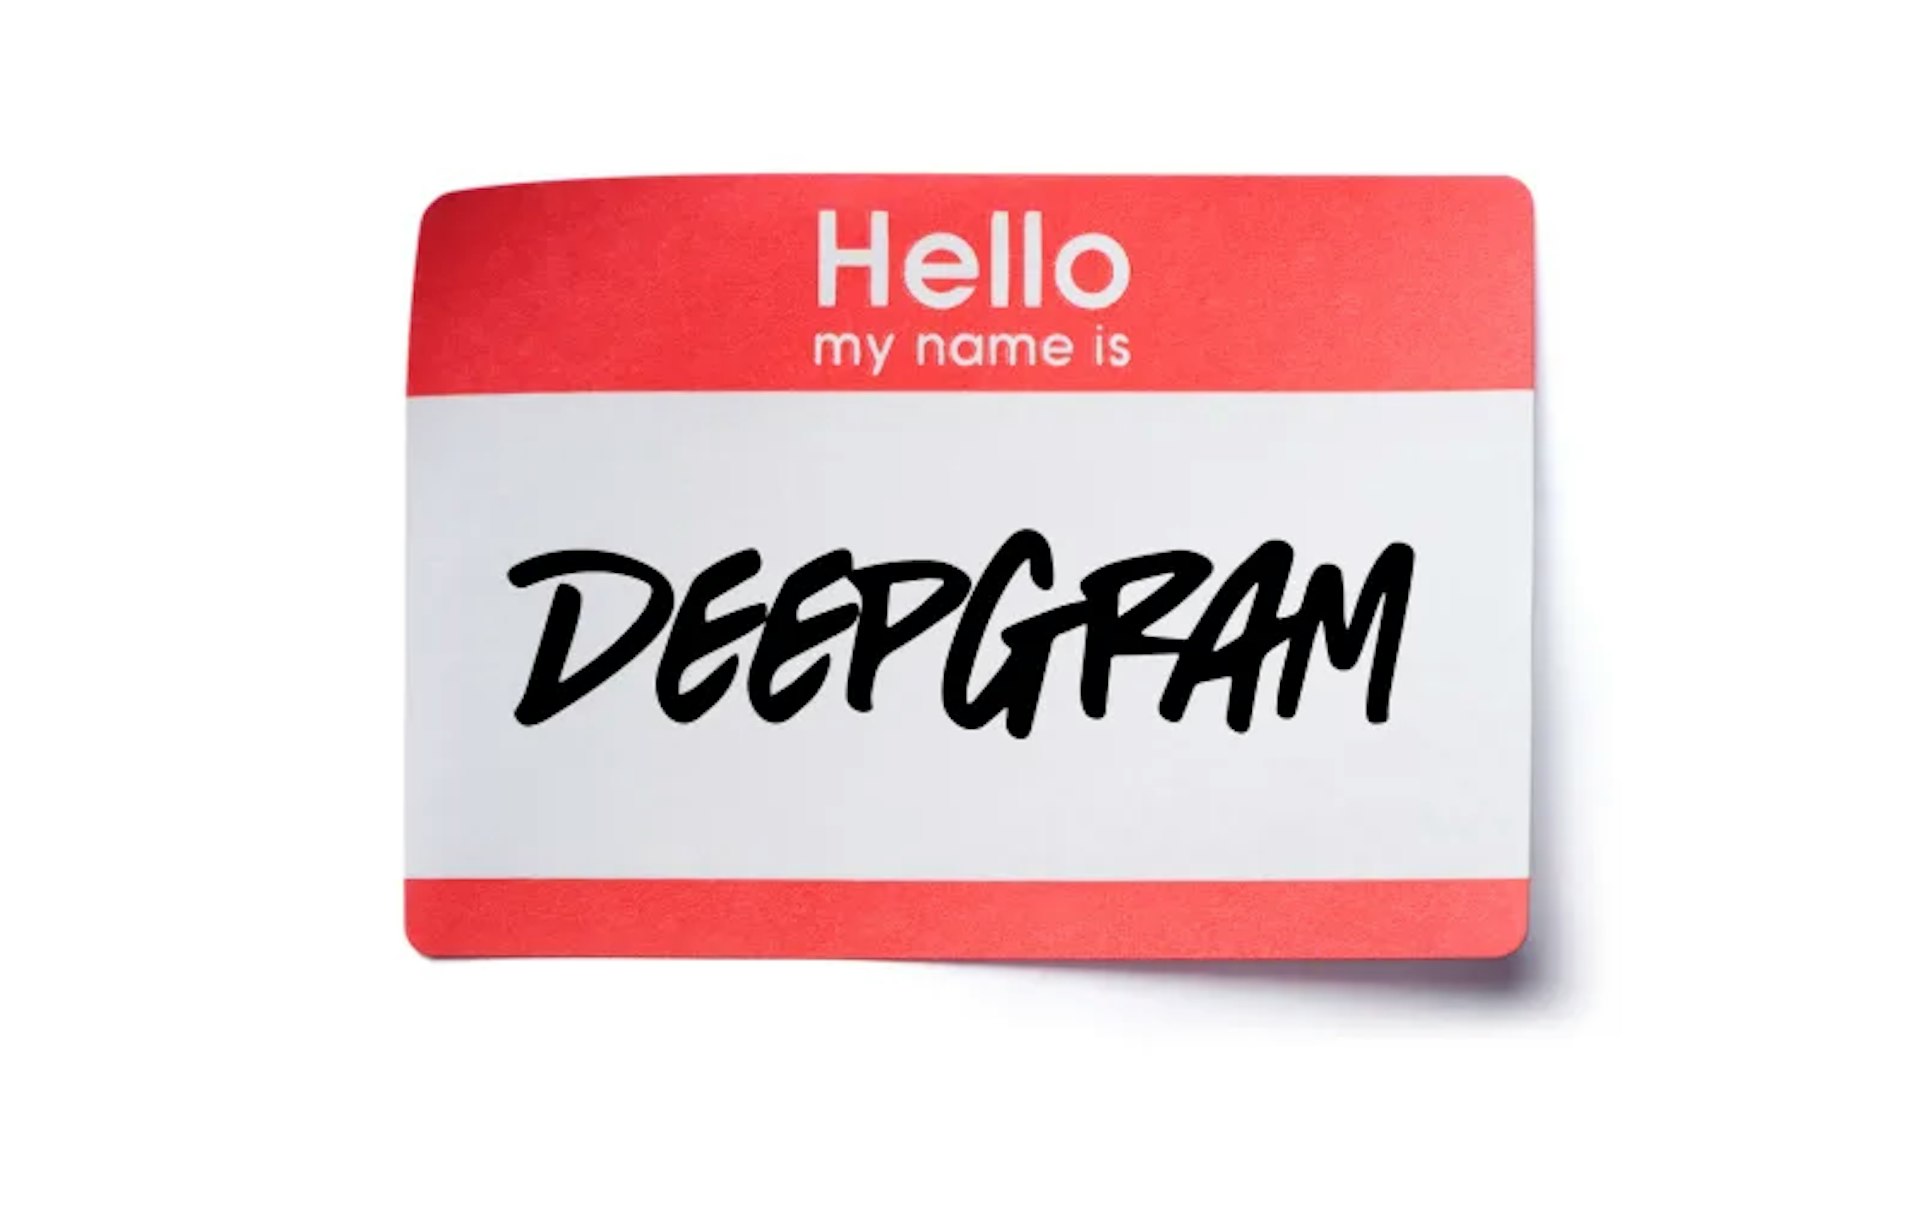 Hello World! We're Deepgram.